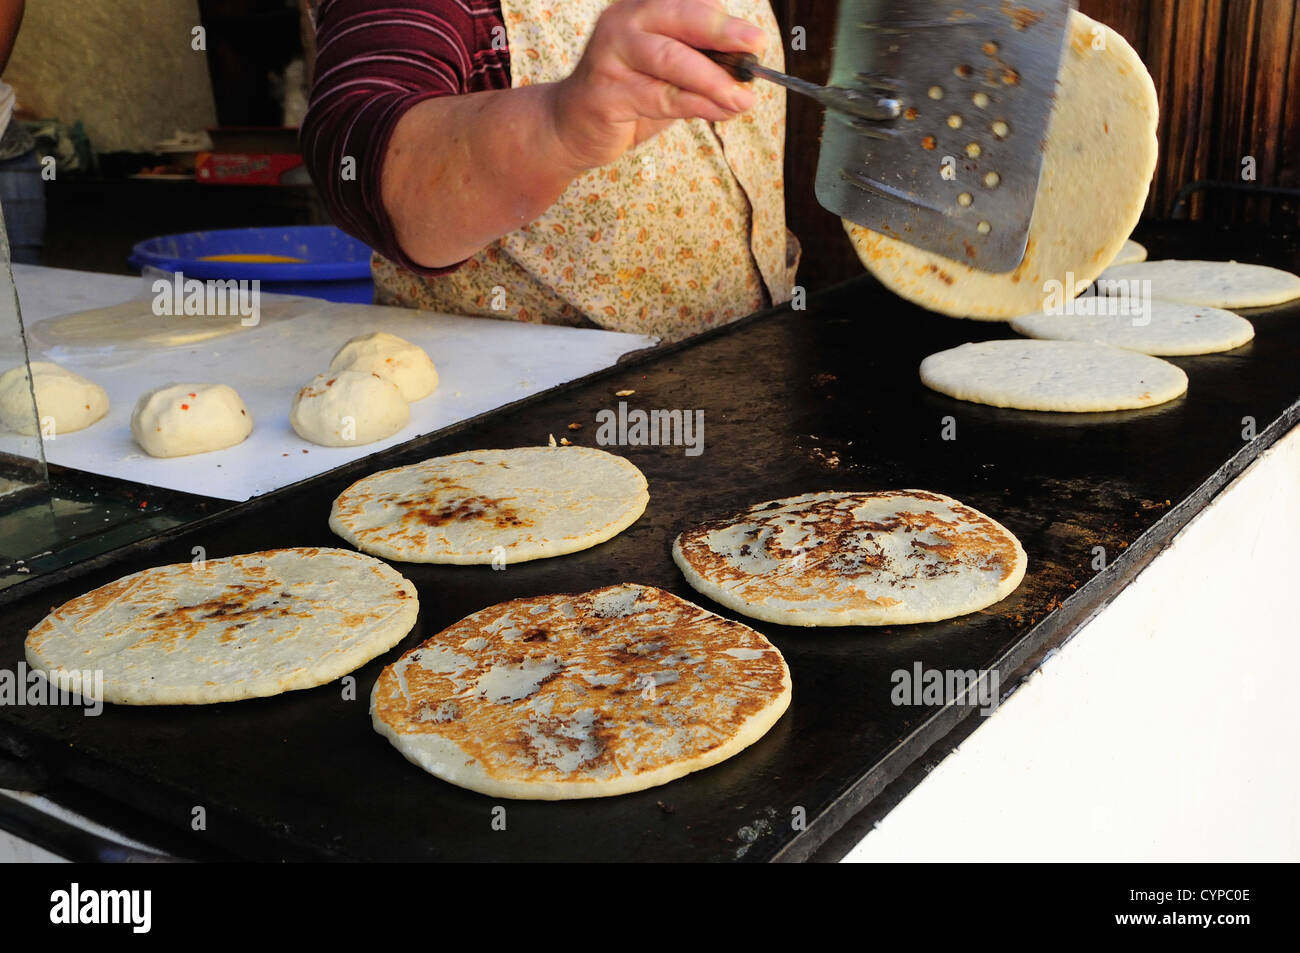 Comal tortillas fotografías e imágenes de alta resolución - Alamy